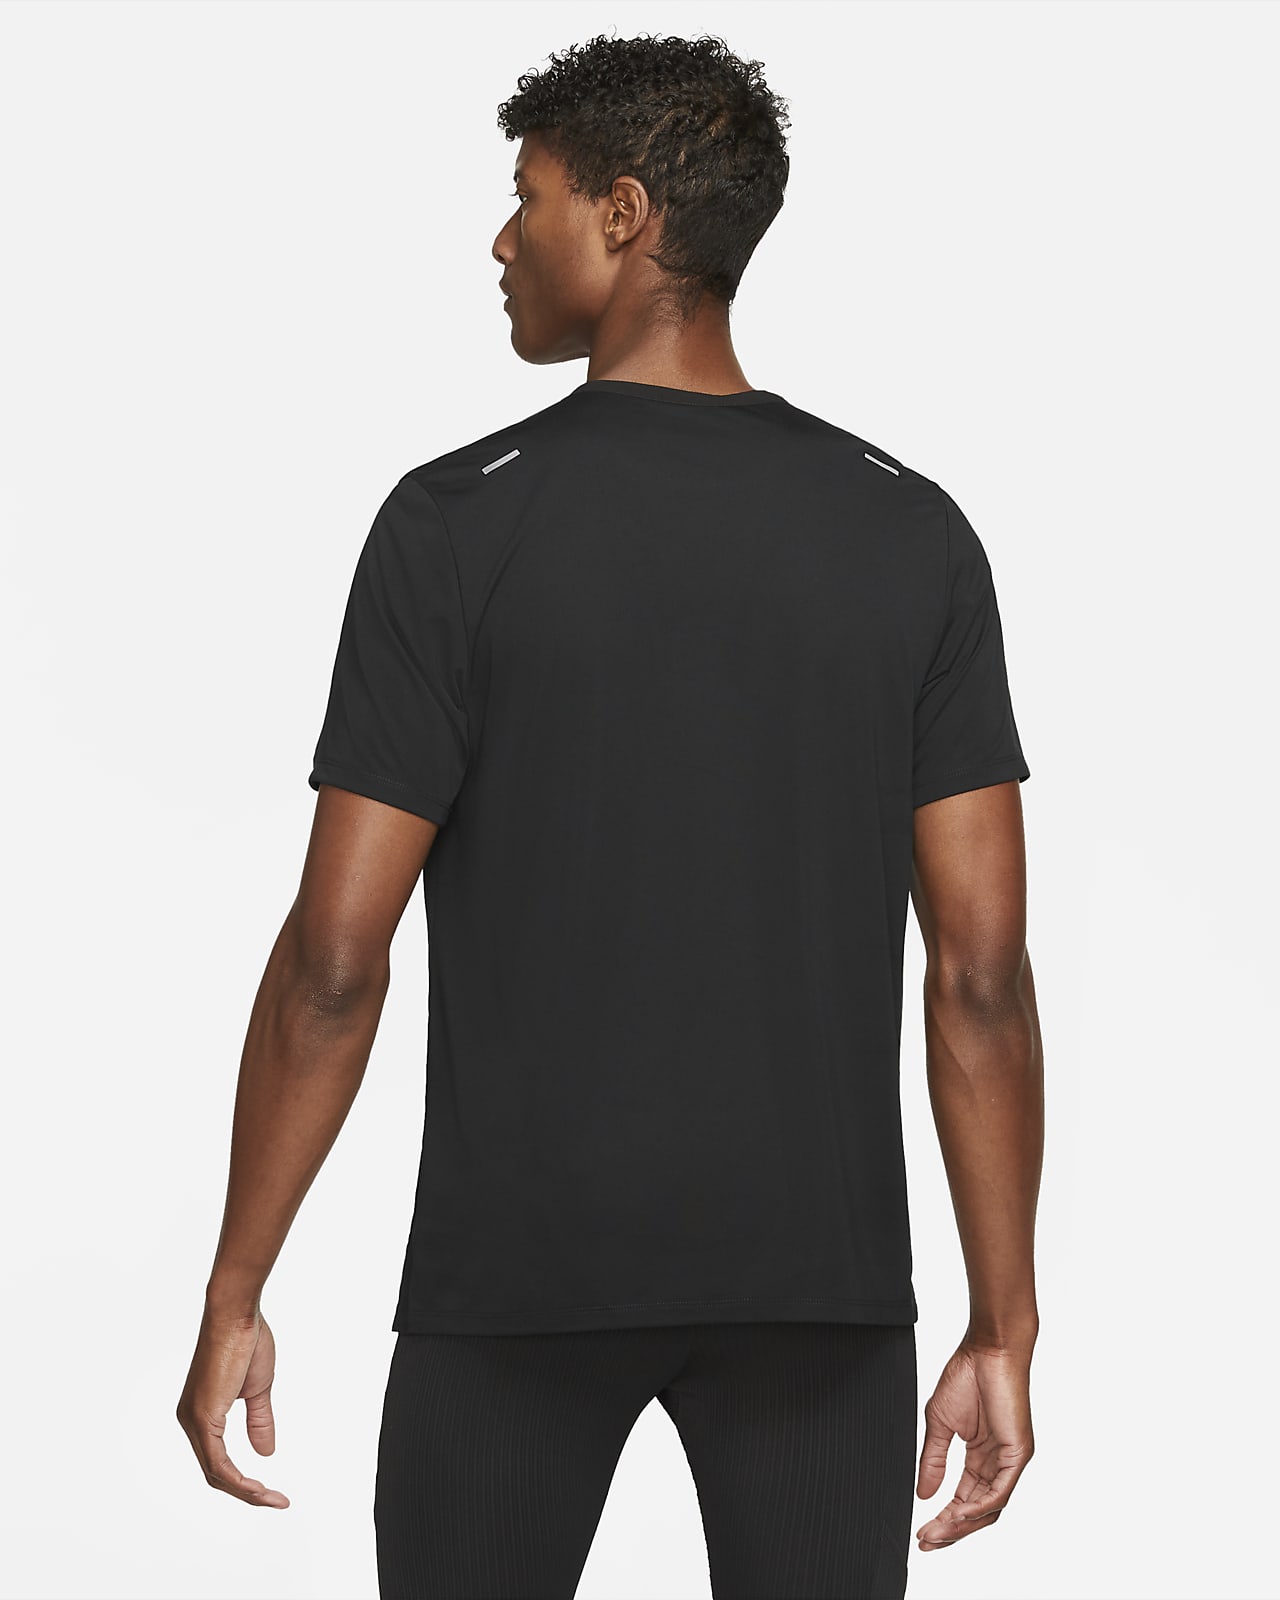 Nike Dri-FIT Rise 365 Men's Short-Sleeve Running Top. Nike MY